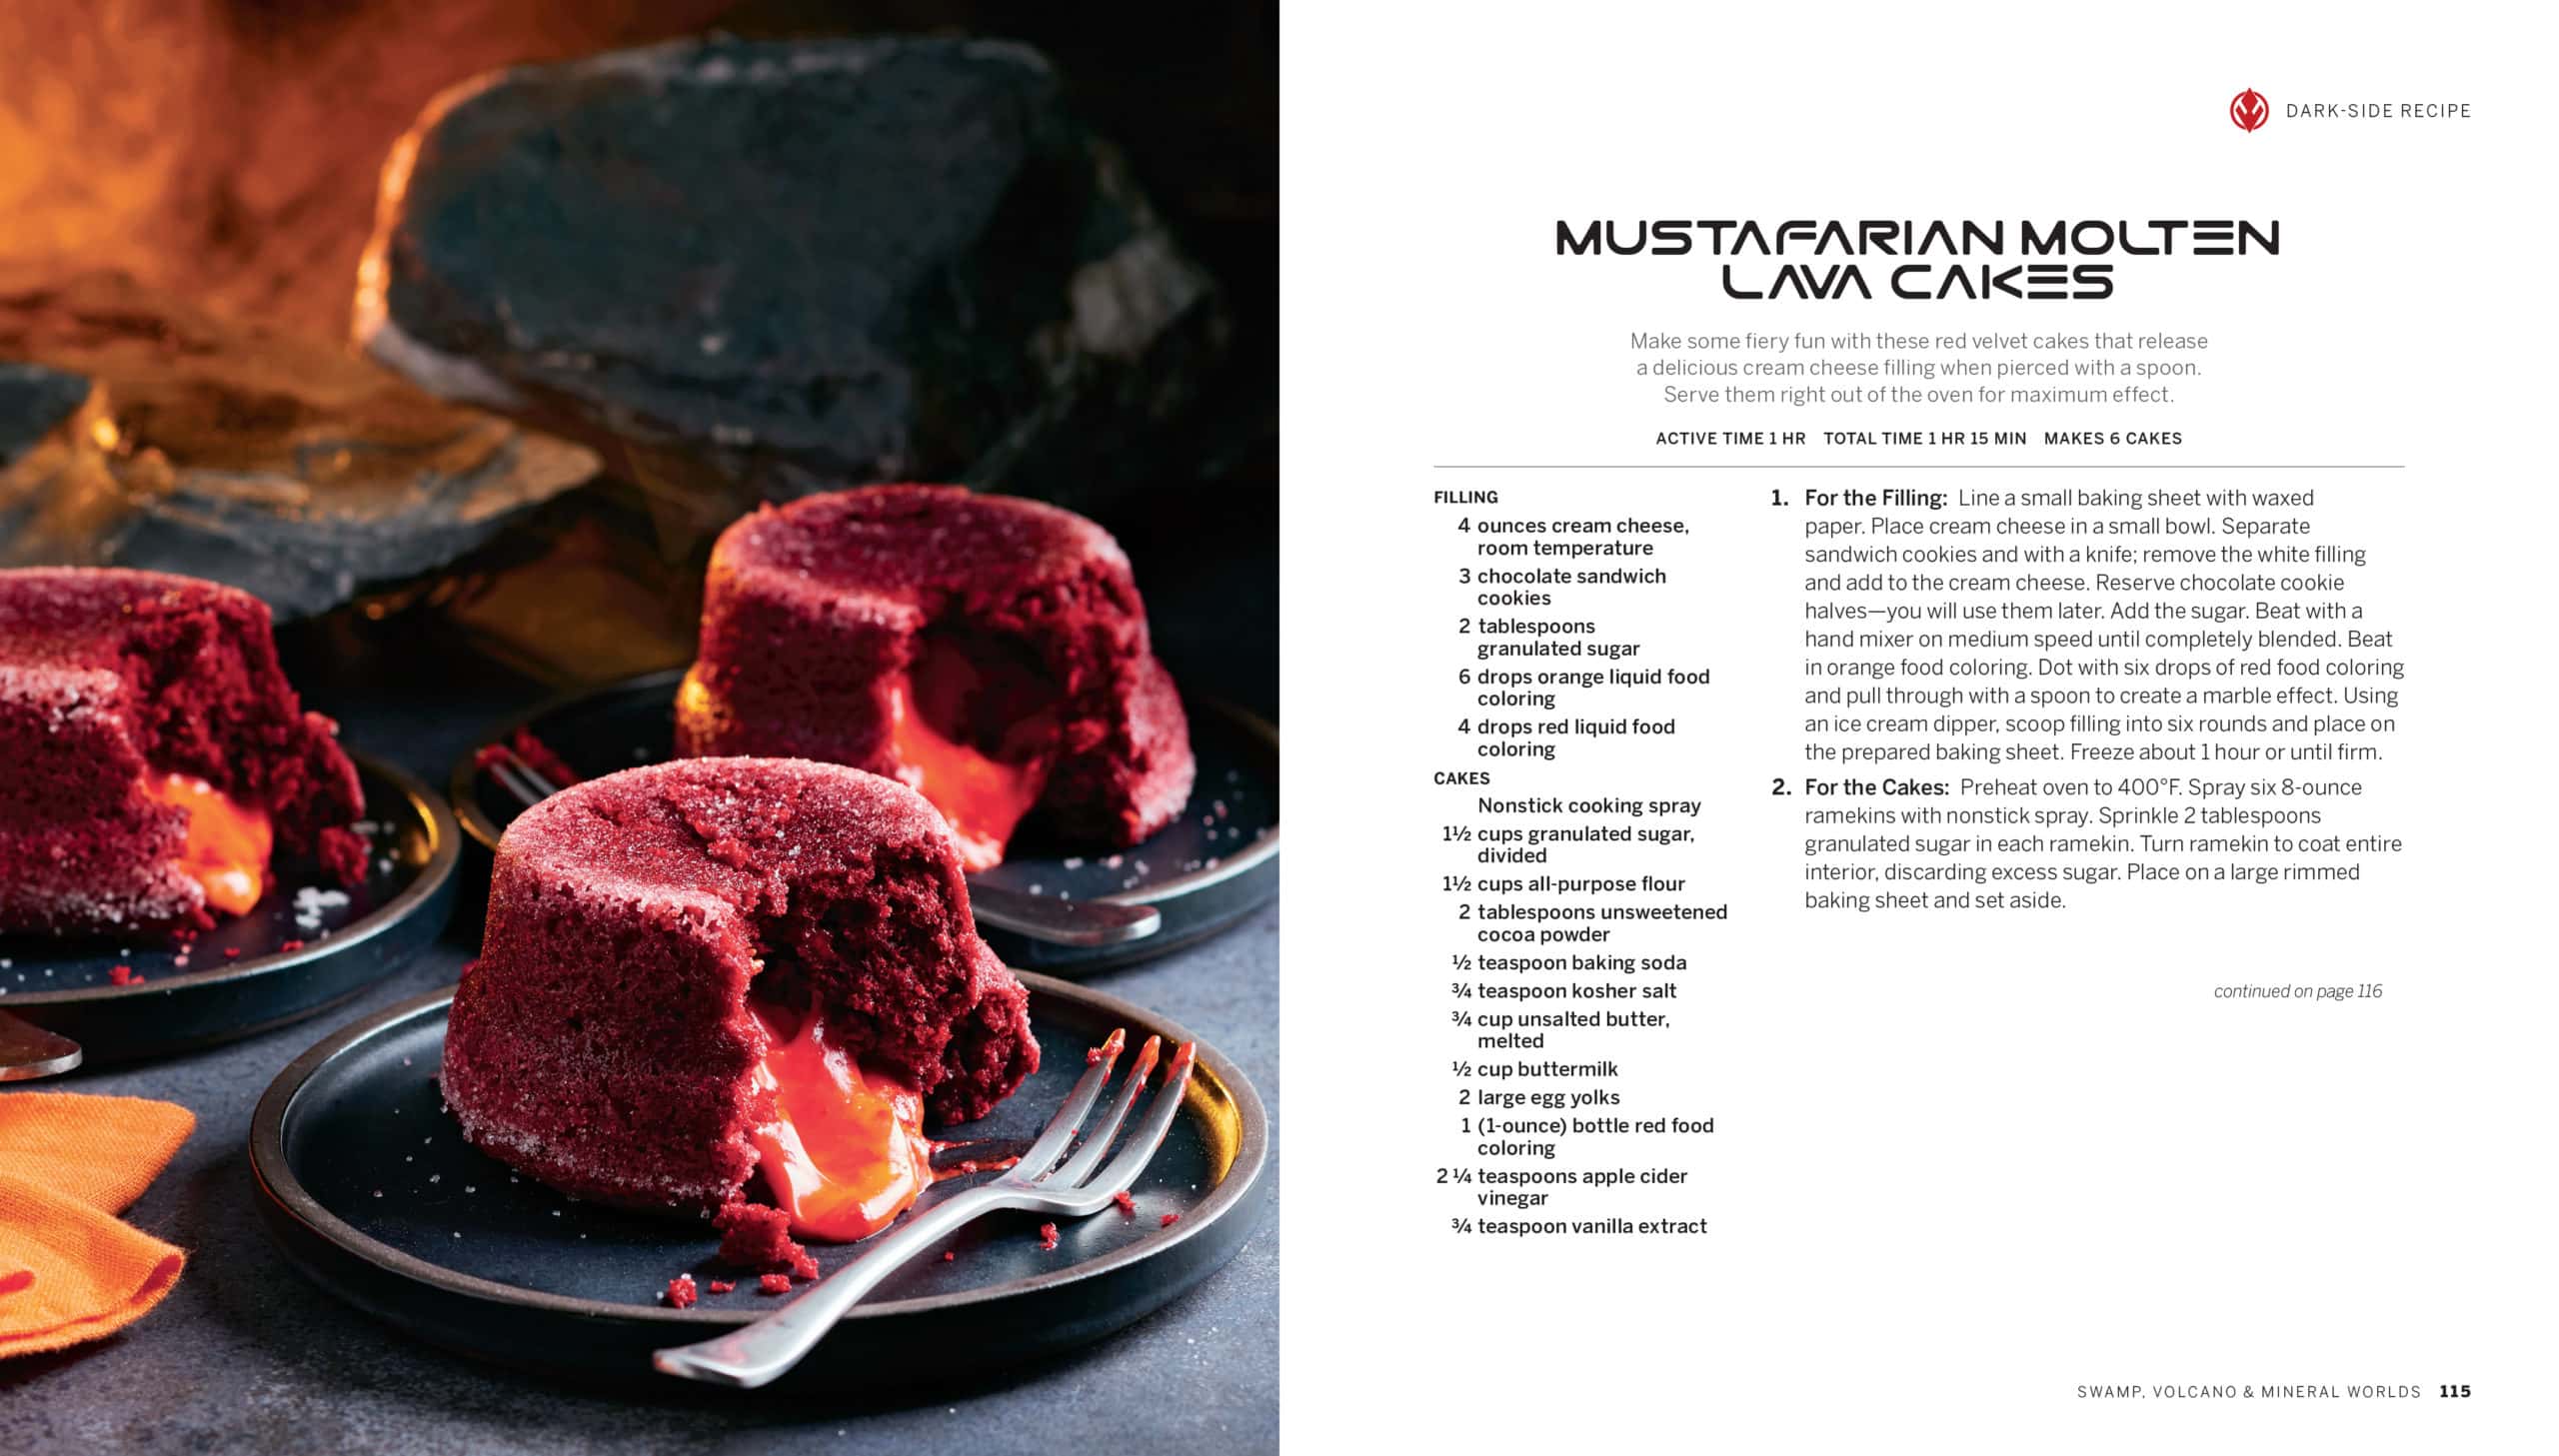 Geek Cooking: Exclusive Star Wars Recipe - Mustafarian Molten Lava Cakes